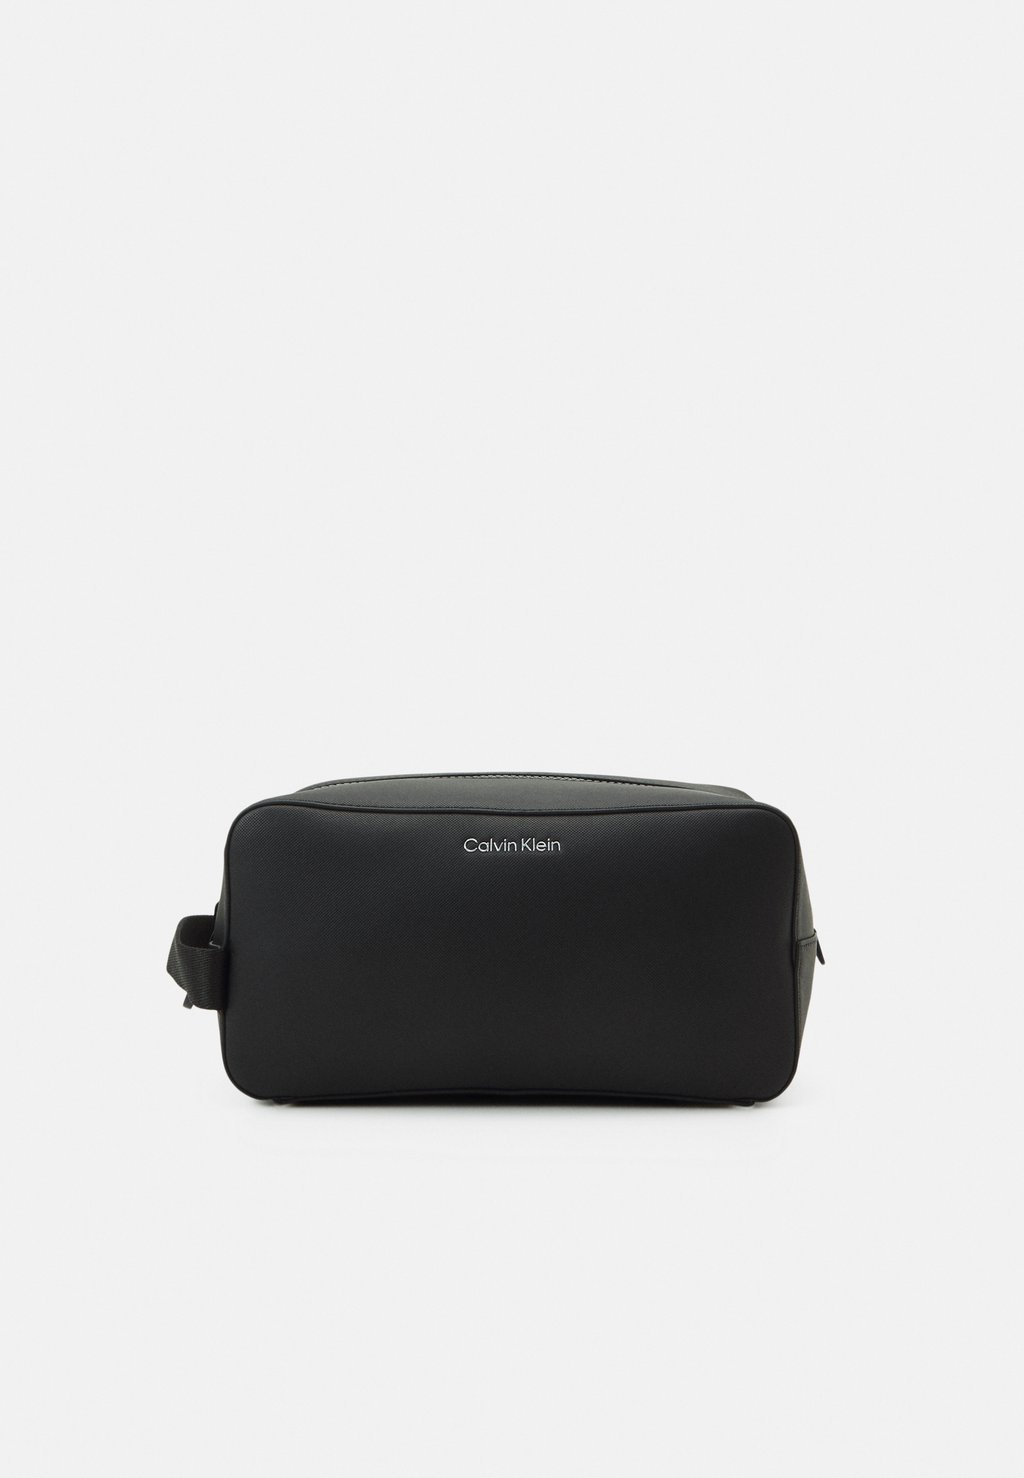 Косметичка Must Washbag Unisex Calvin Klein, черный косметичка силиконовая bw washbag